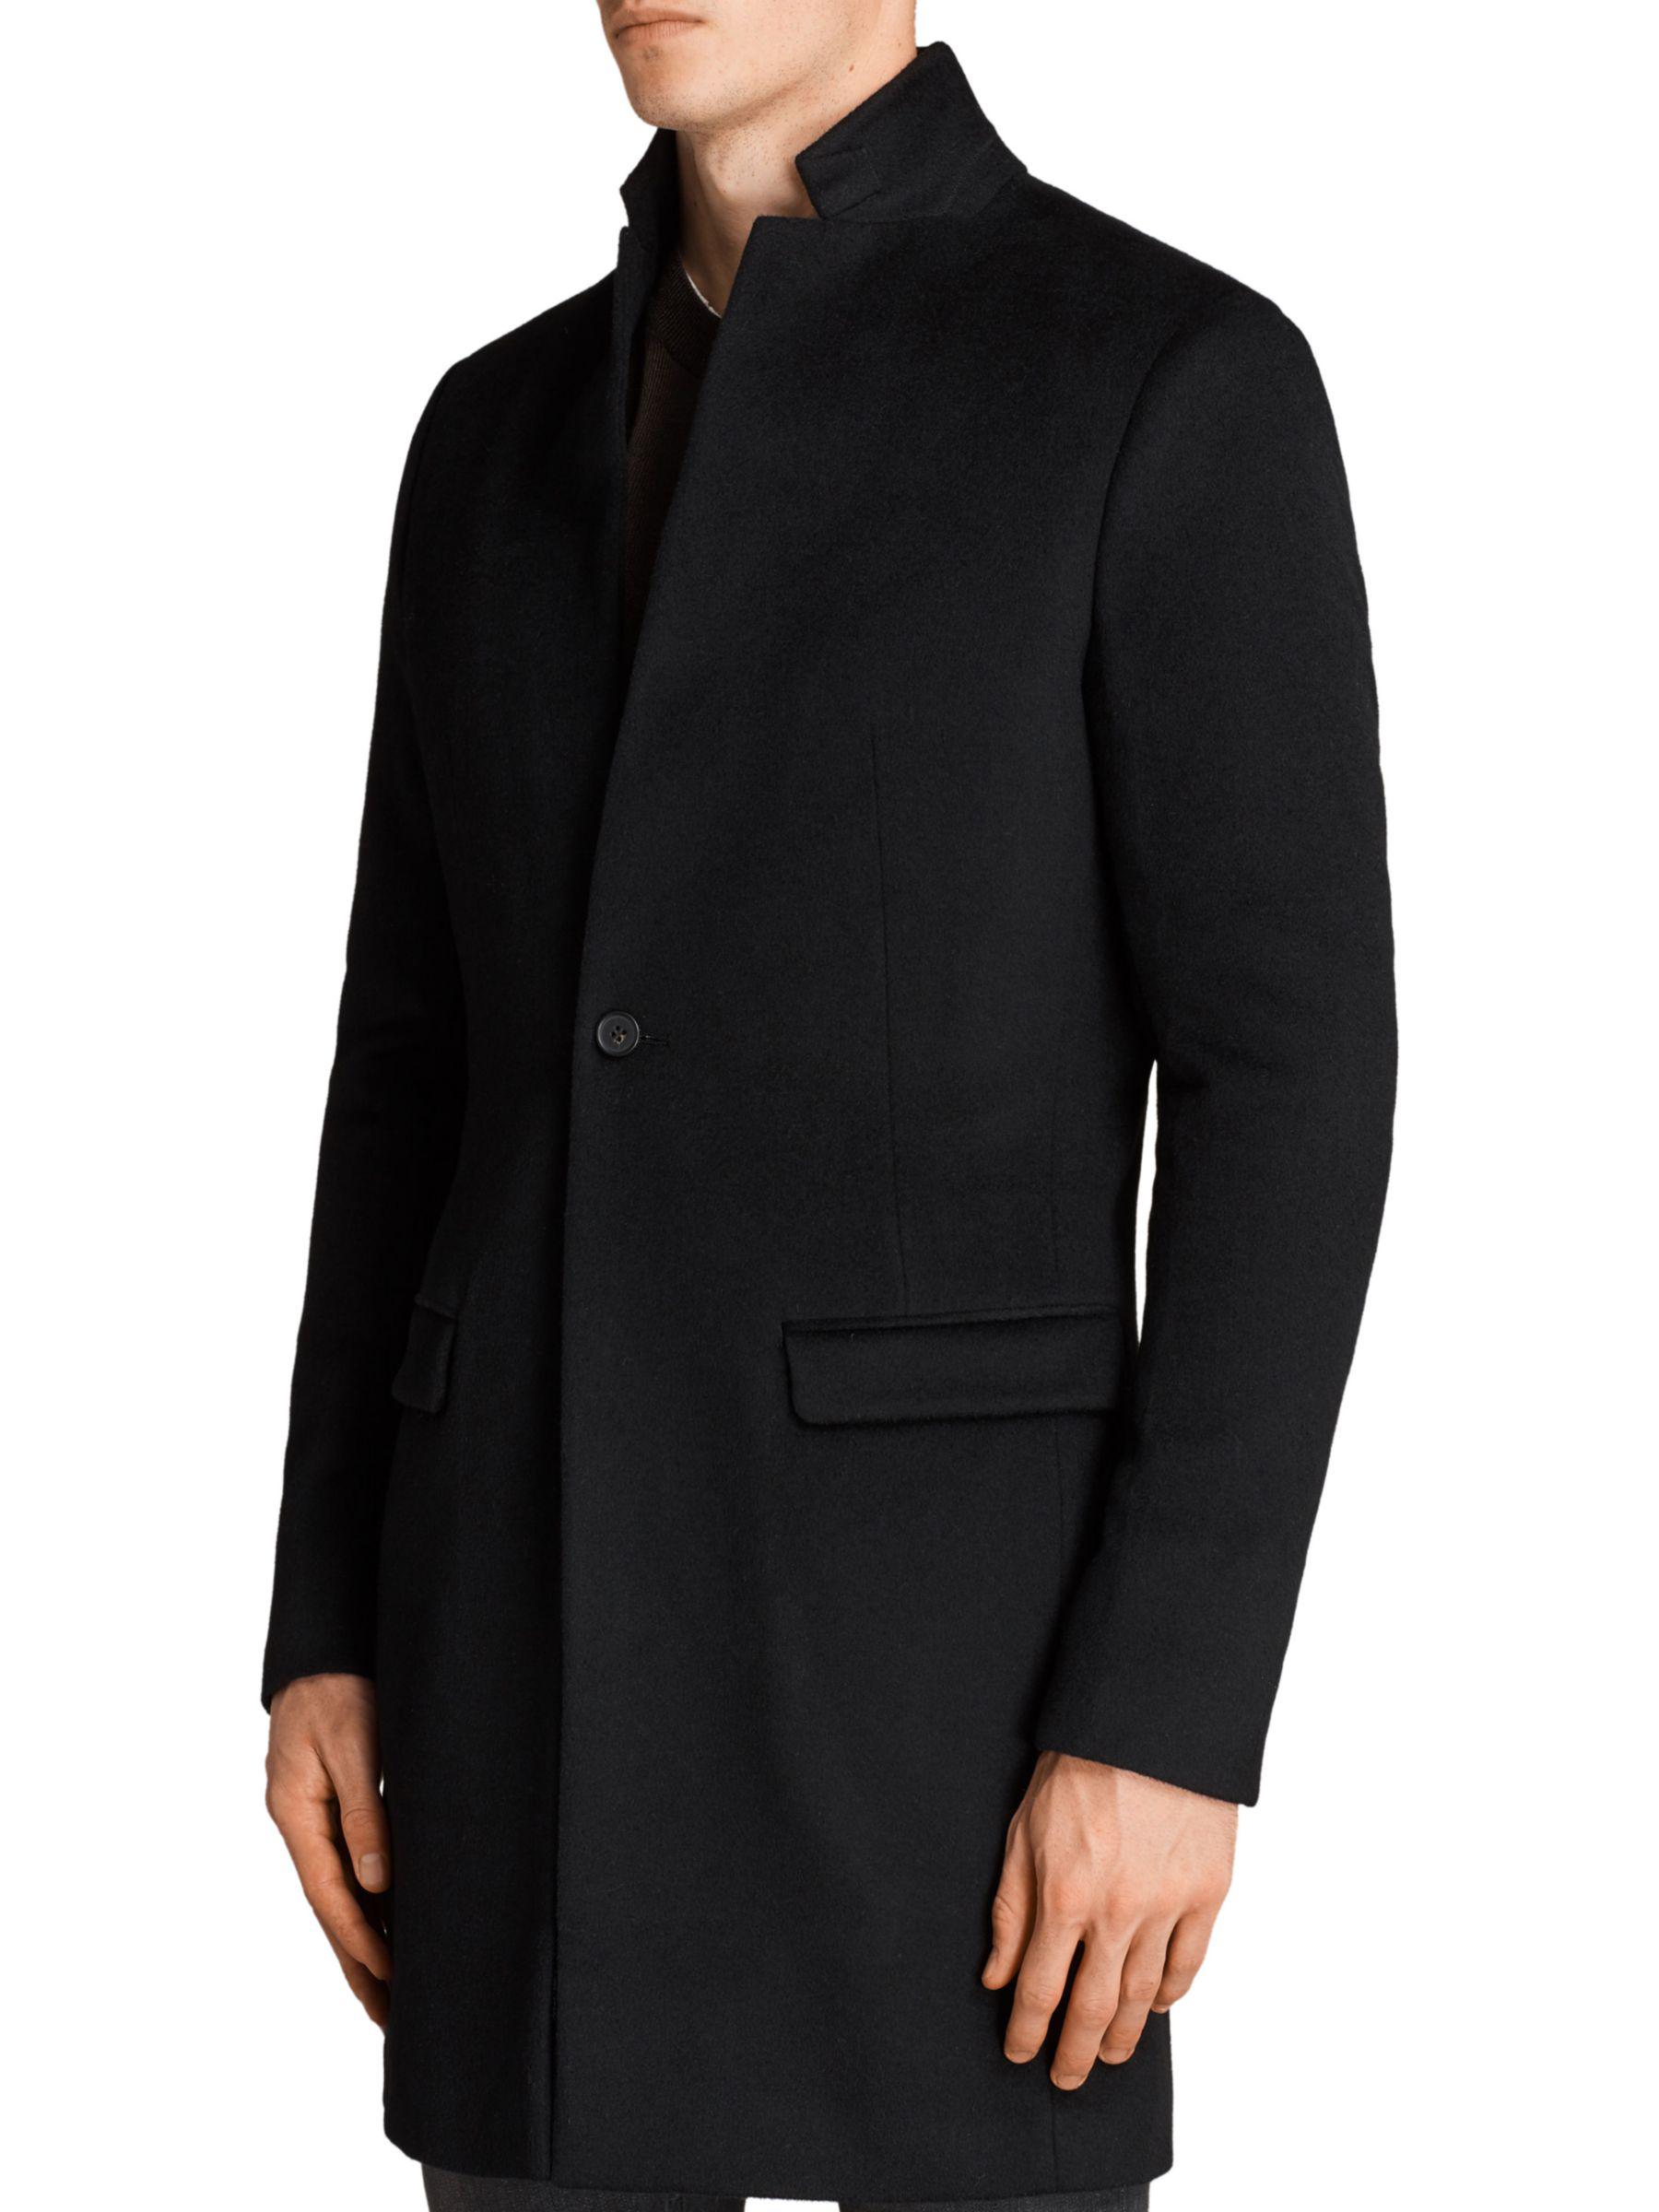 AllSaints Bodell Wool Tailored Coat in Black for Men - Lyst